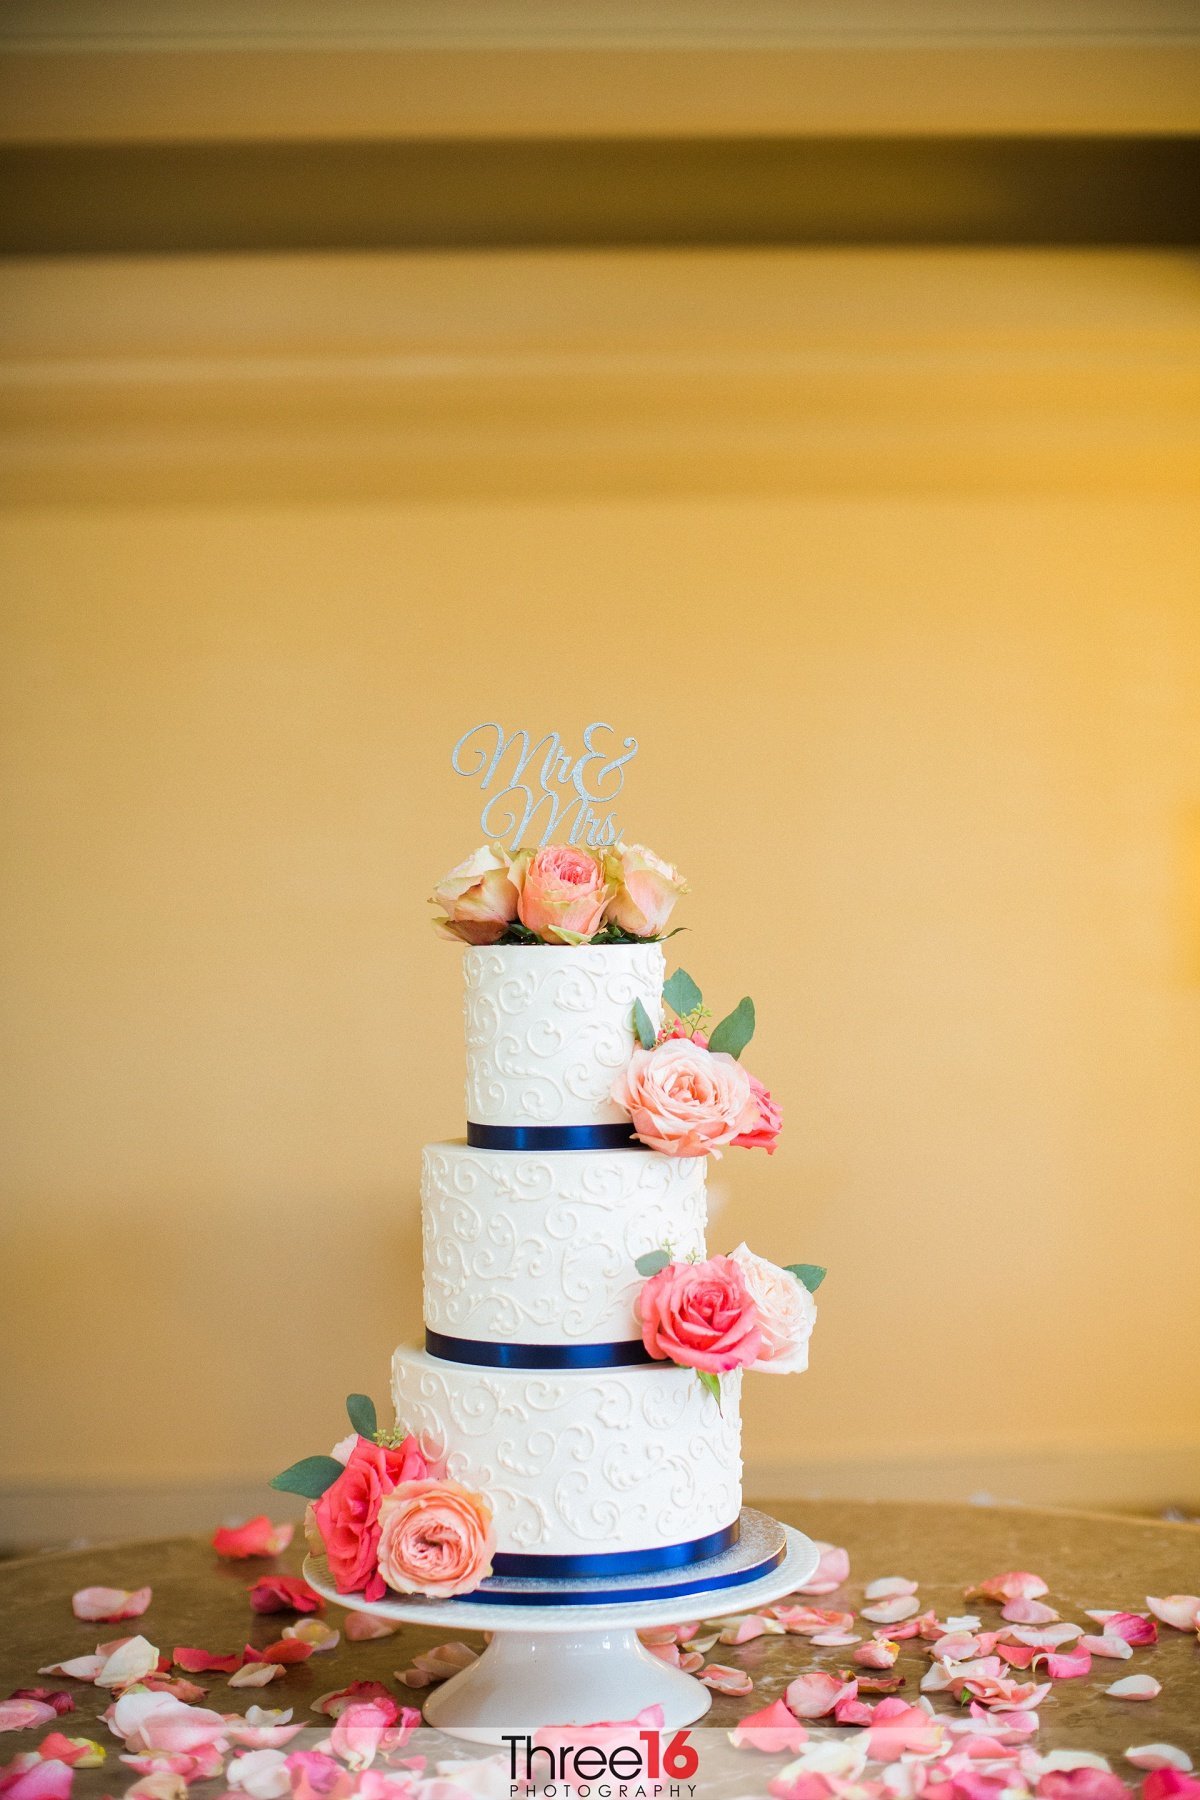 3-tiered white wedding cake surround by rose petals